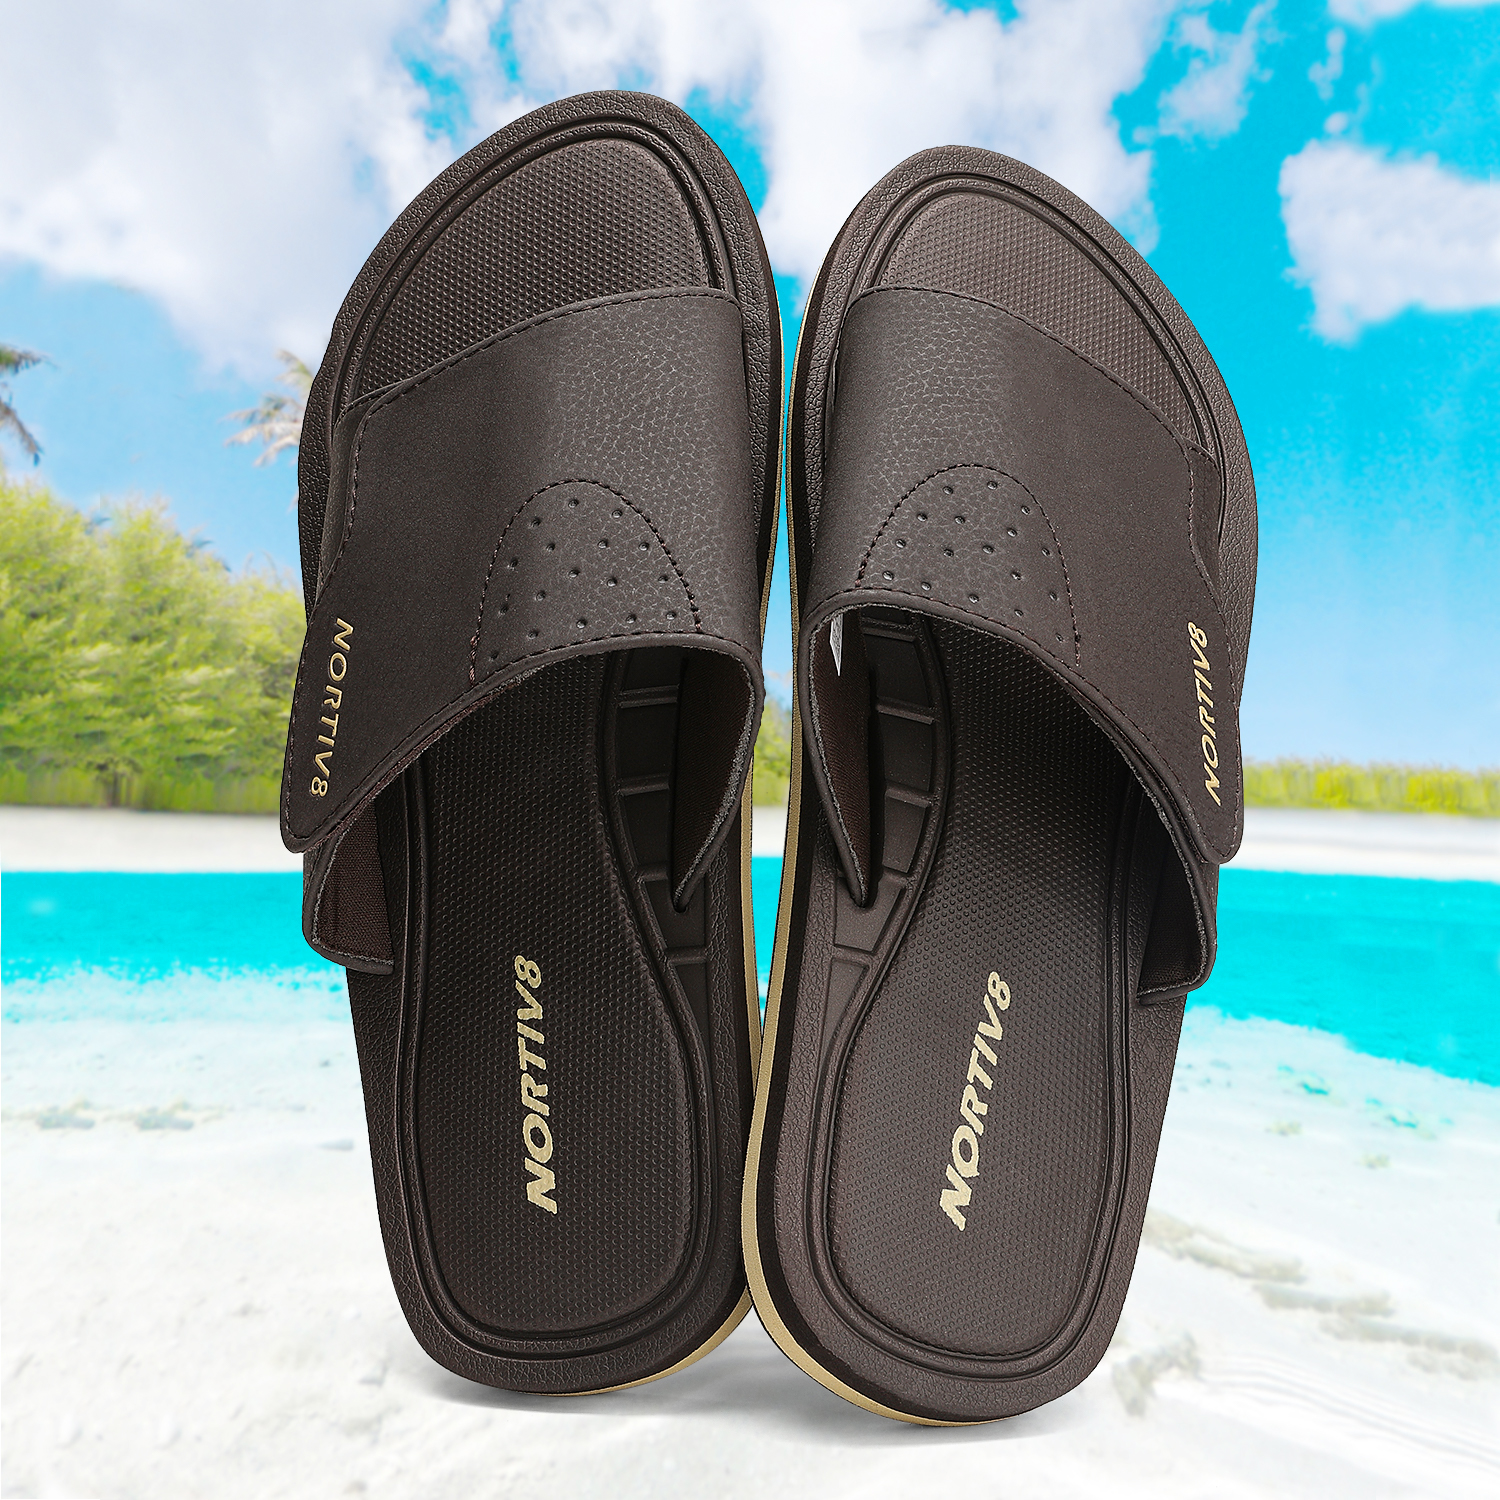 Nortiv 8 Men's Memory Foam Adjustable Slide Sandals Comfort Lightweight Beach Shoes Summer Outdoor Slipper Fusion Dark/Brown Size 8 - image 5 of 5